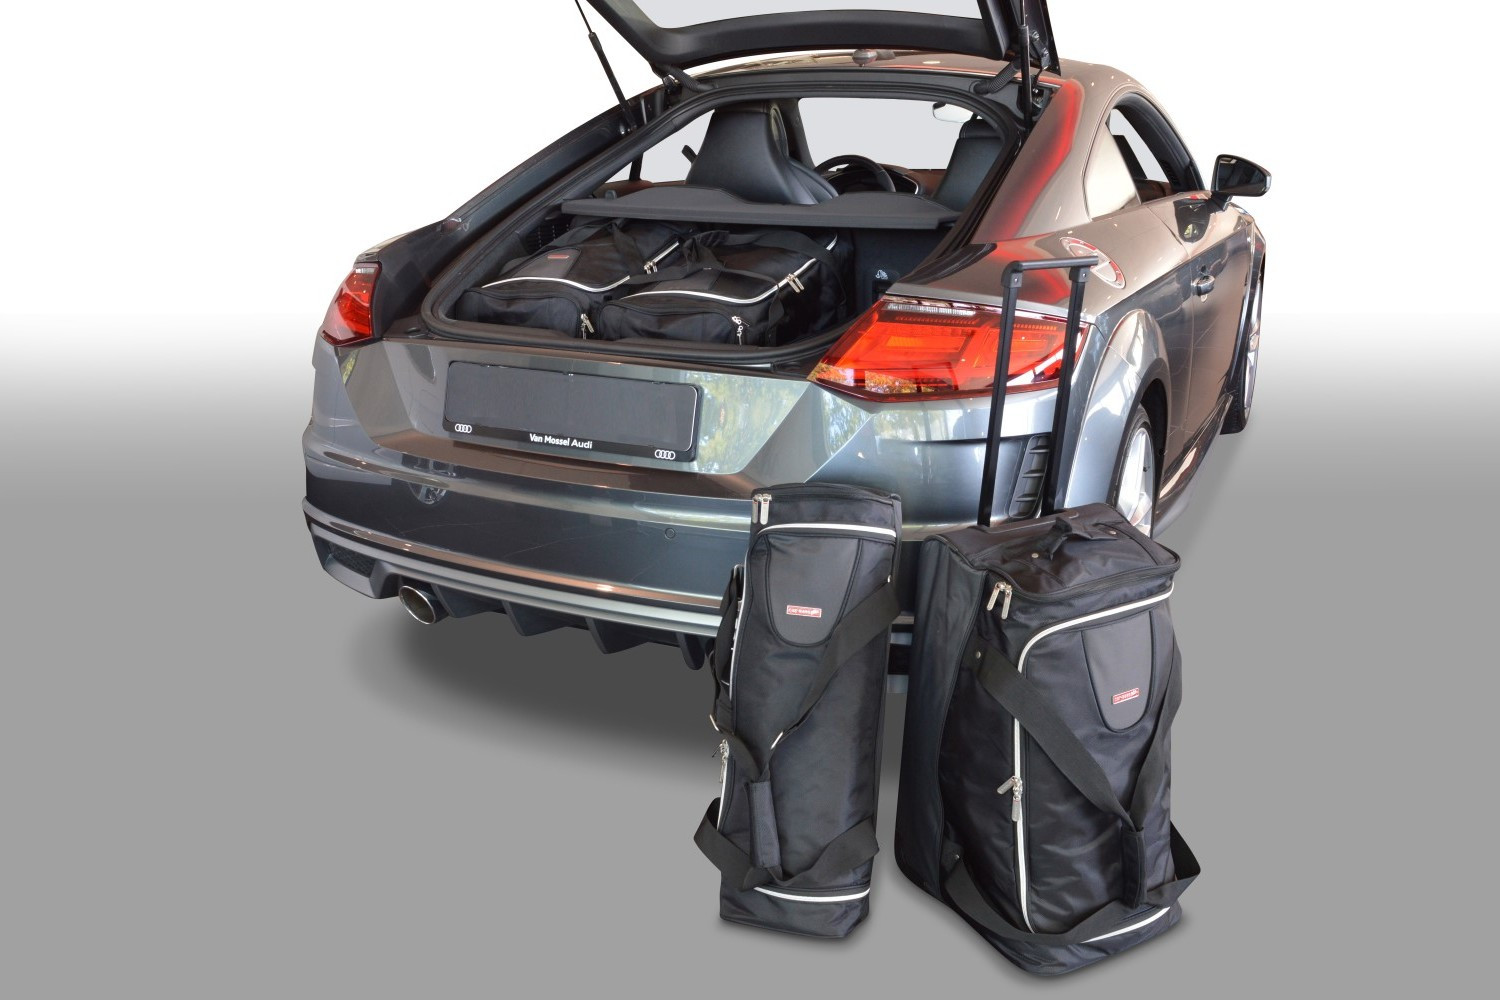 Audi TT Coupé (8S) 2014-present Car-Bags travel bags